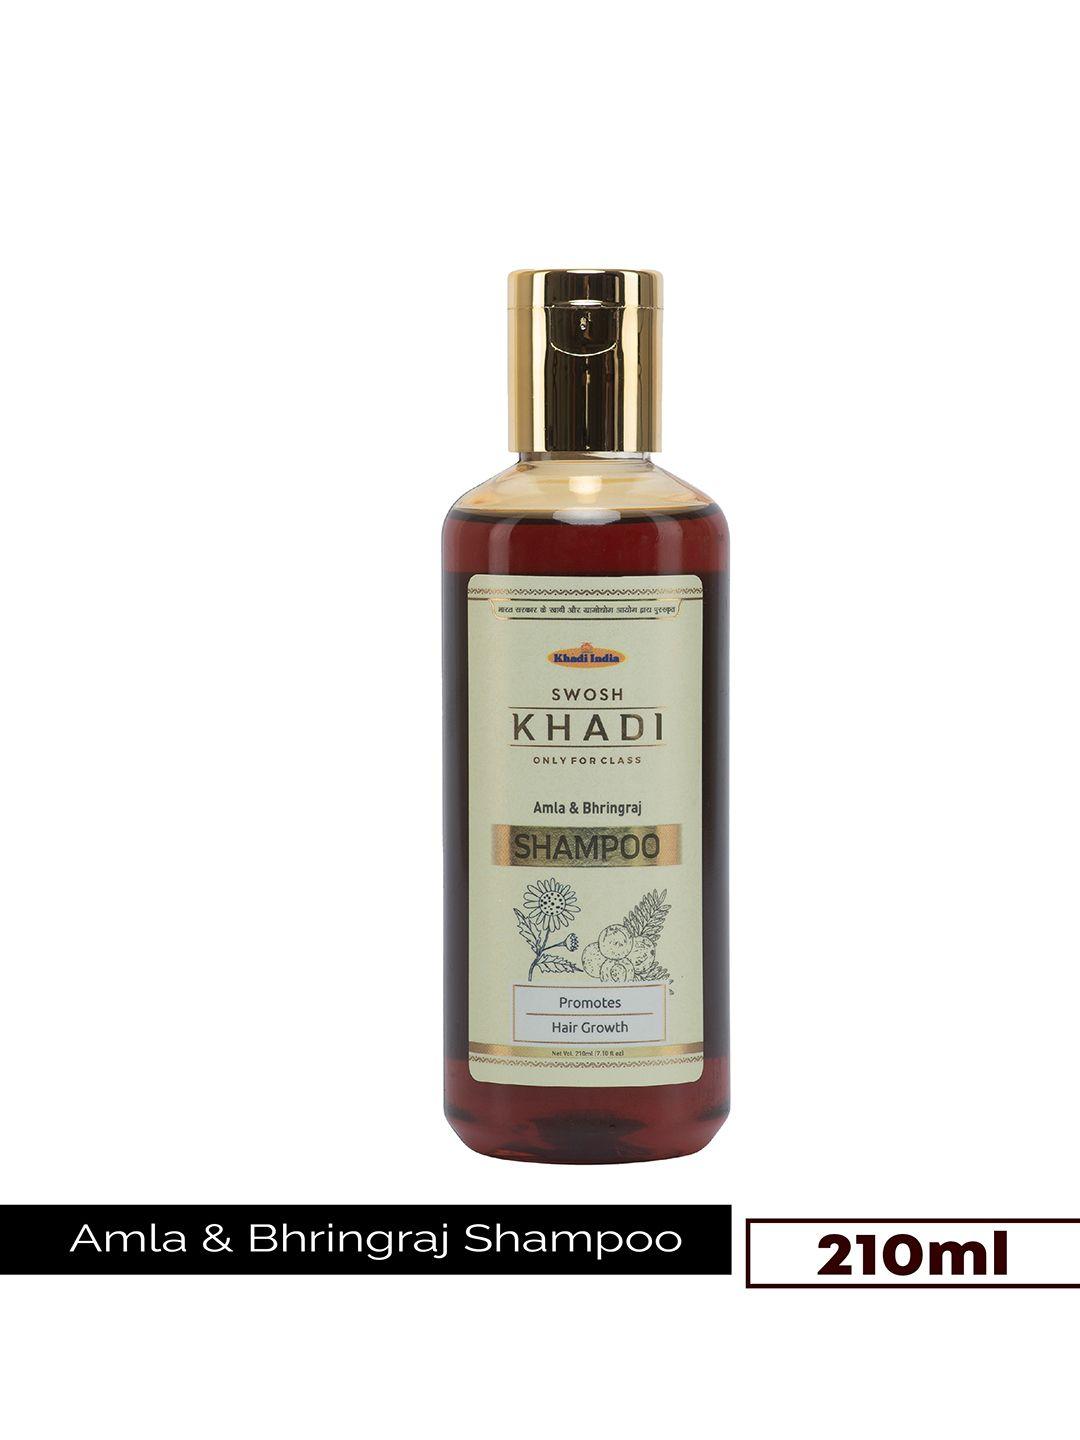 swosh khadi amla & bhringraj shampoo for hair growth - 210 ml